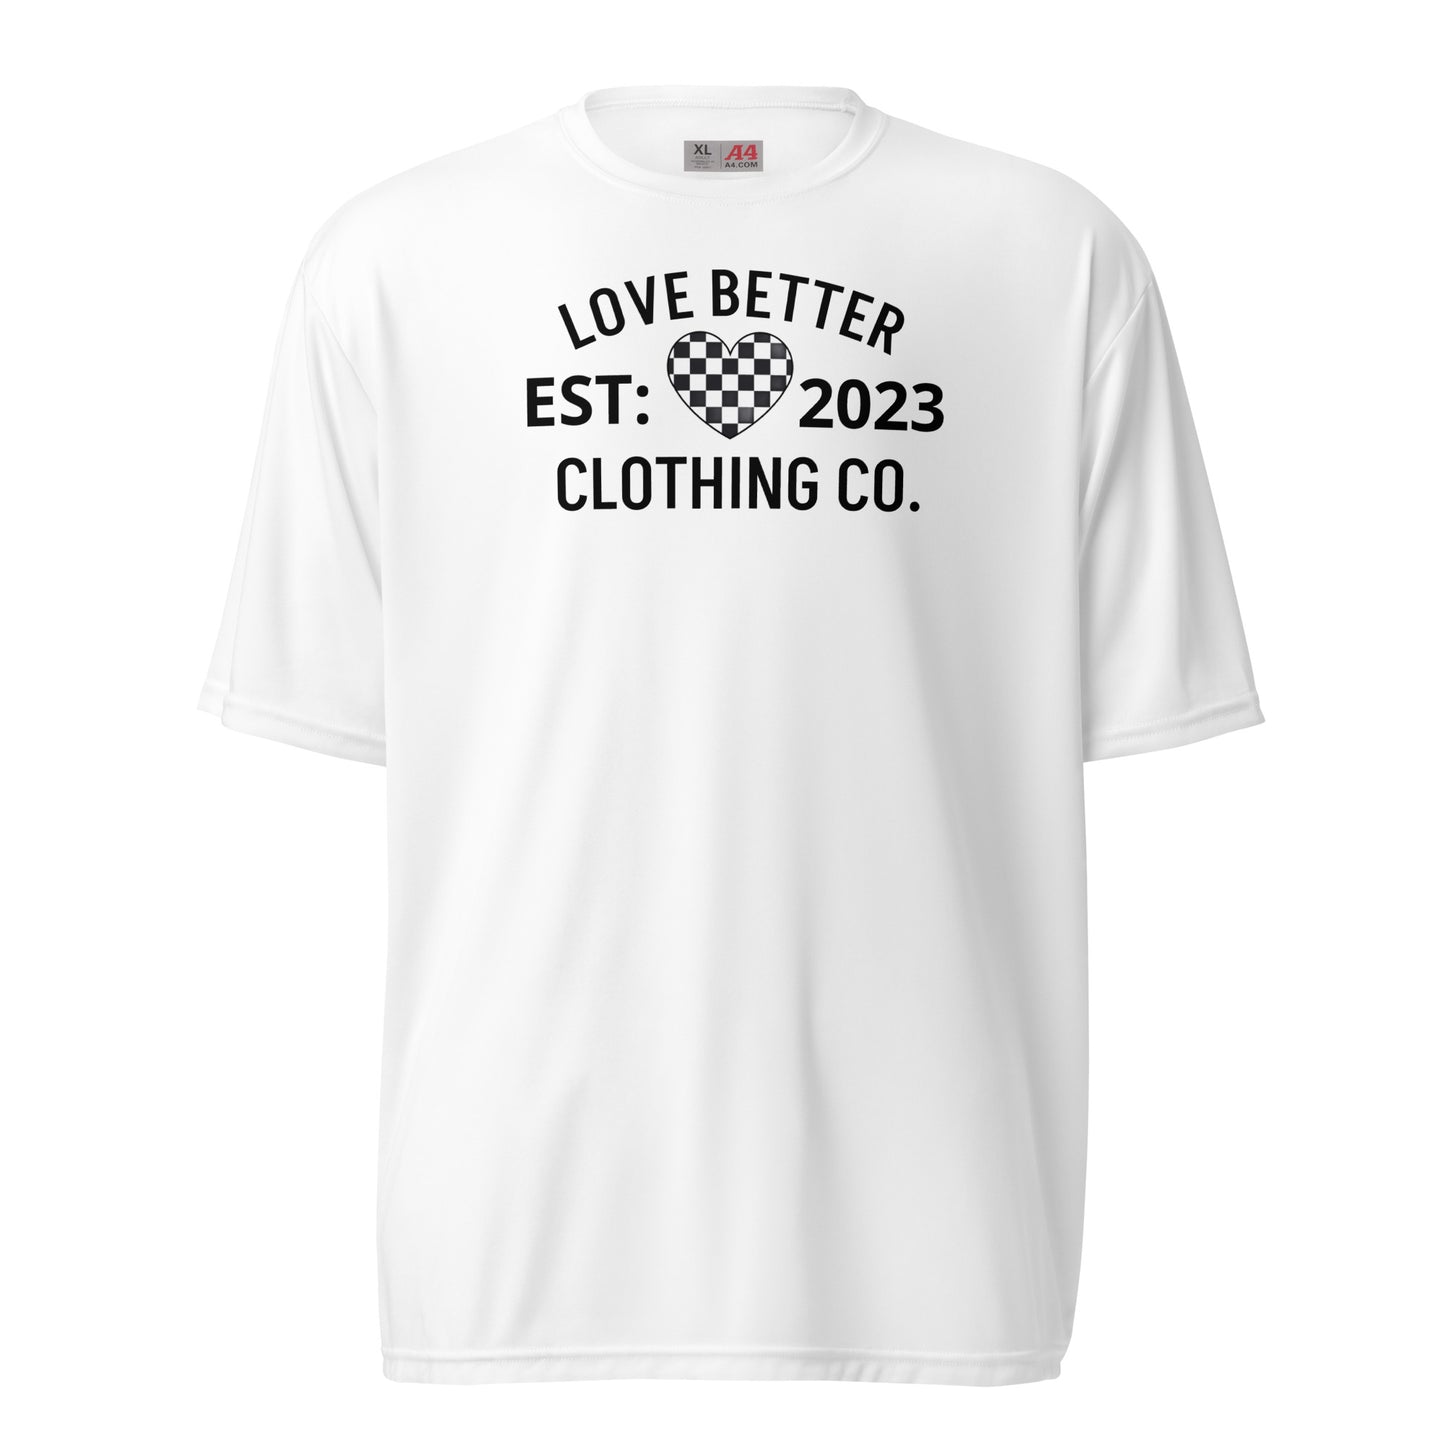 LOVE BETTER "THE CLASSIC" Unisex performance crew neck t-shirt